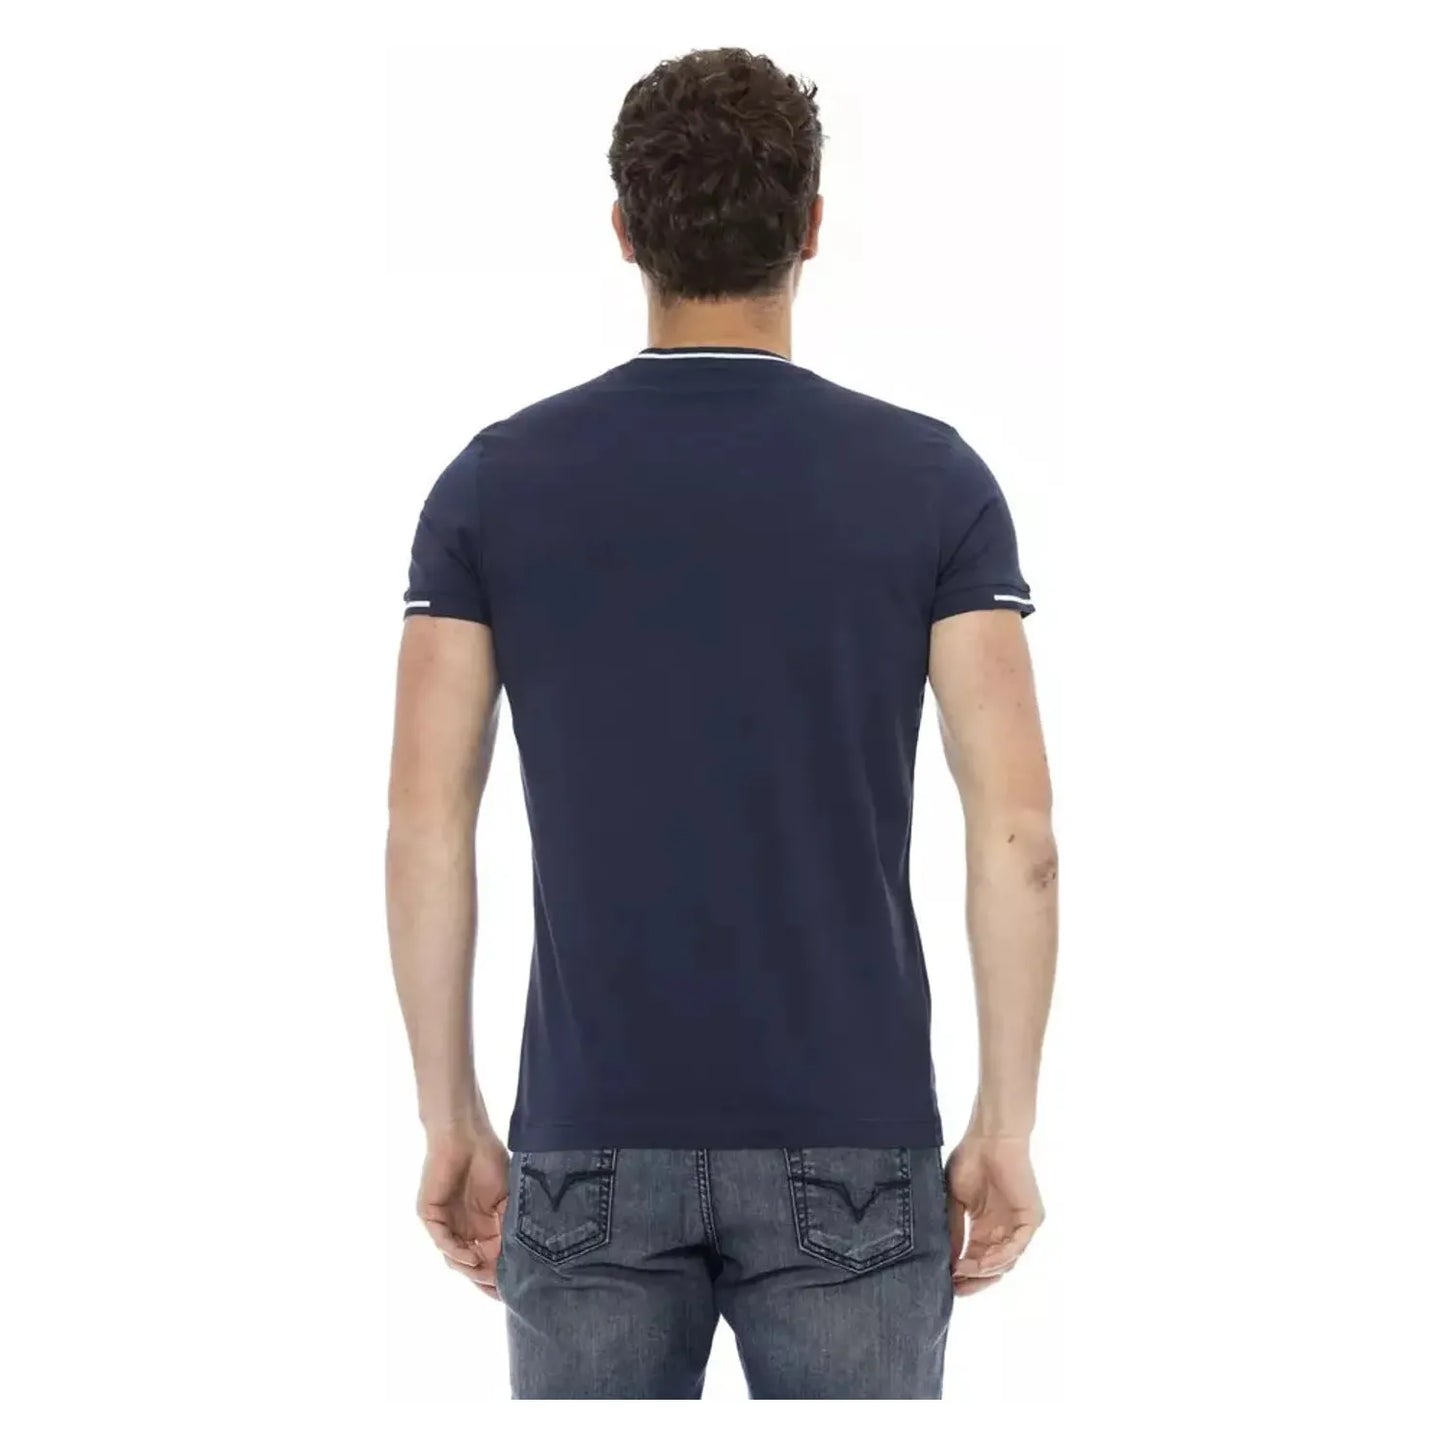 Trussardi Action Sleek Short Sleeve Blue Tee with Front Print blue-cotton-t-shirt-96